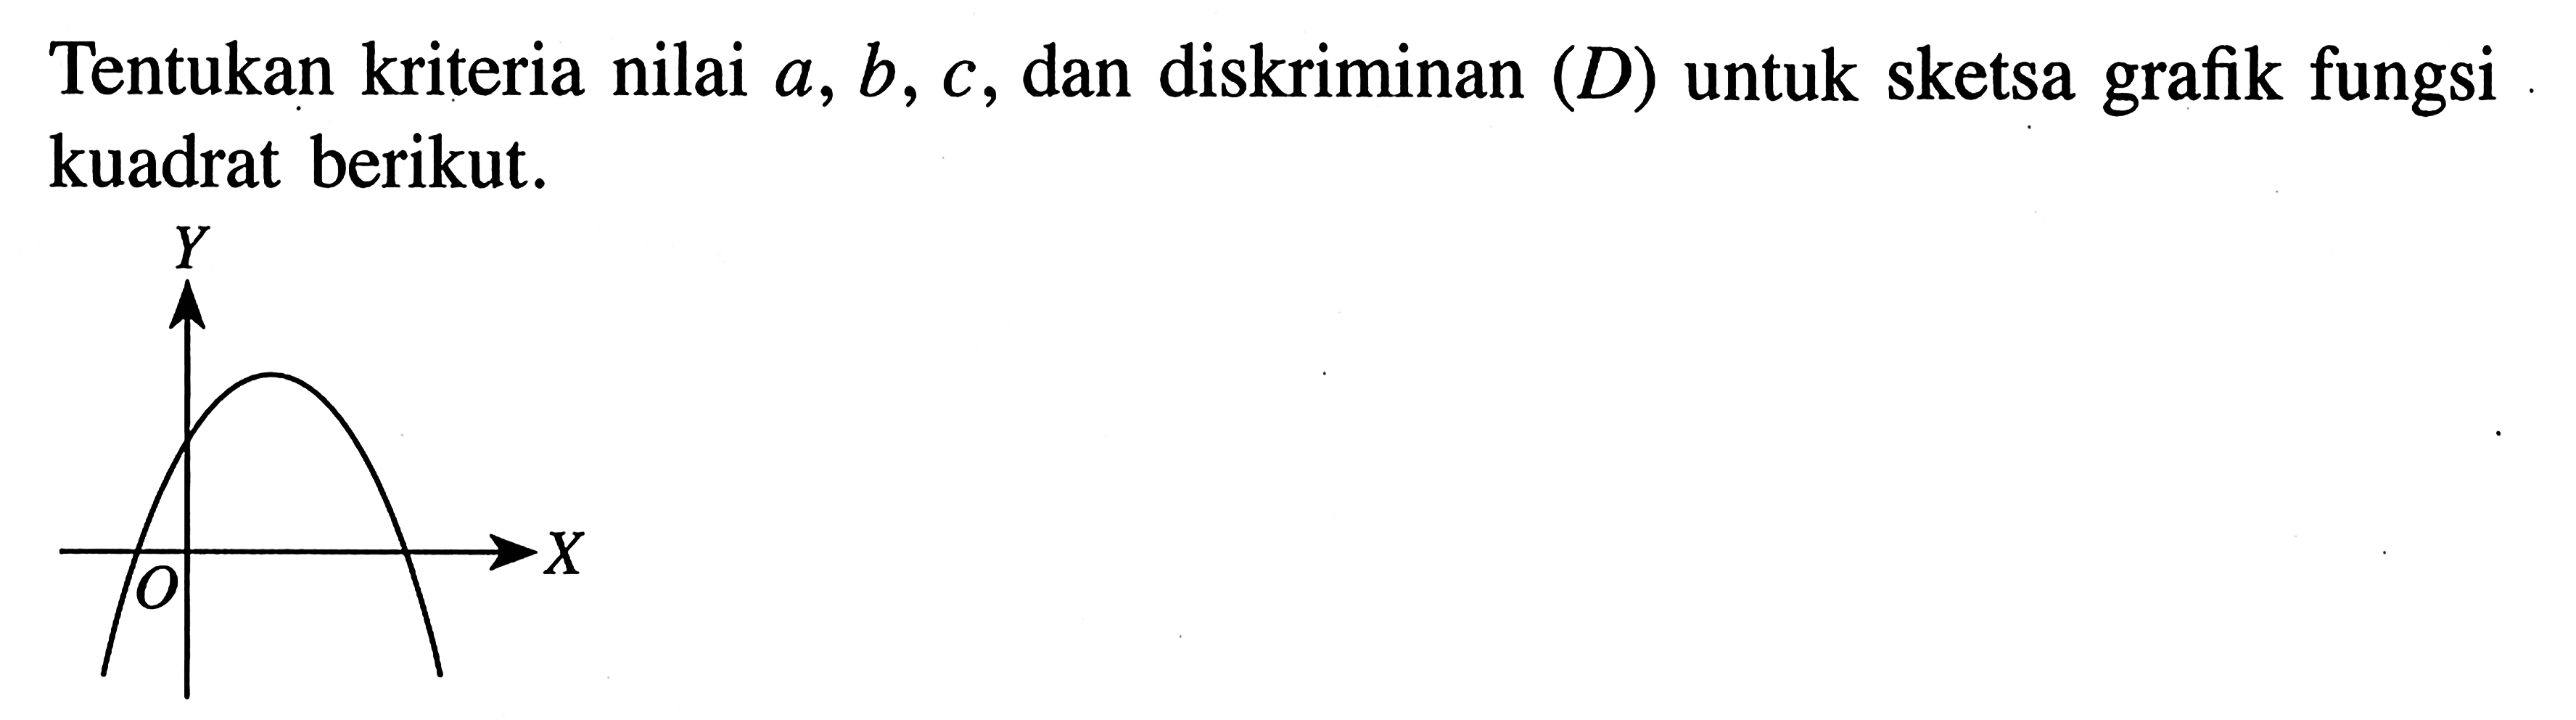 Tentukan kriteria nilai a, b, c, dan diskriminan (D) untuk sketsa grafik fungsi kuadrat berikut.